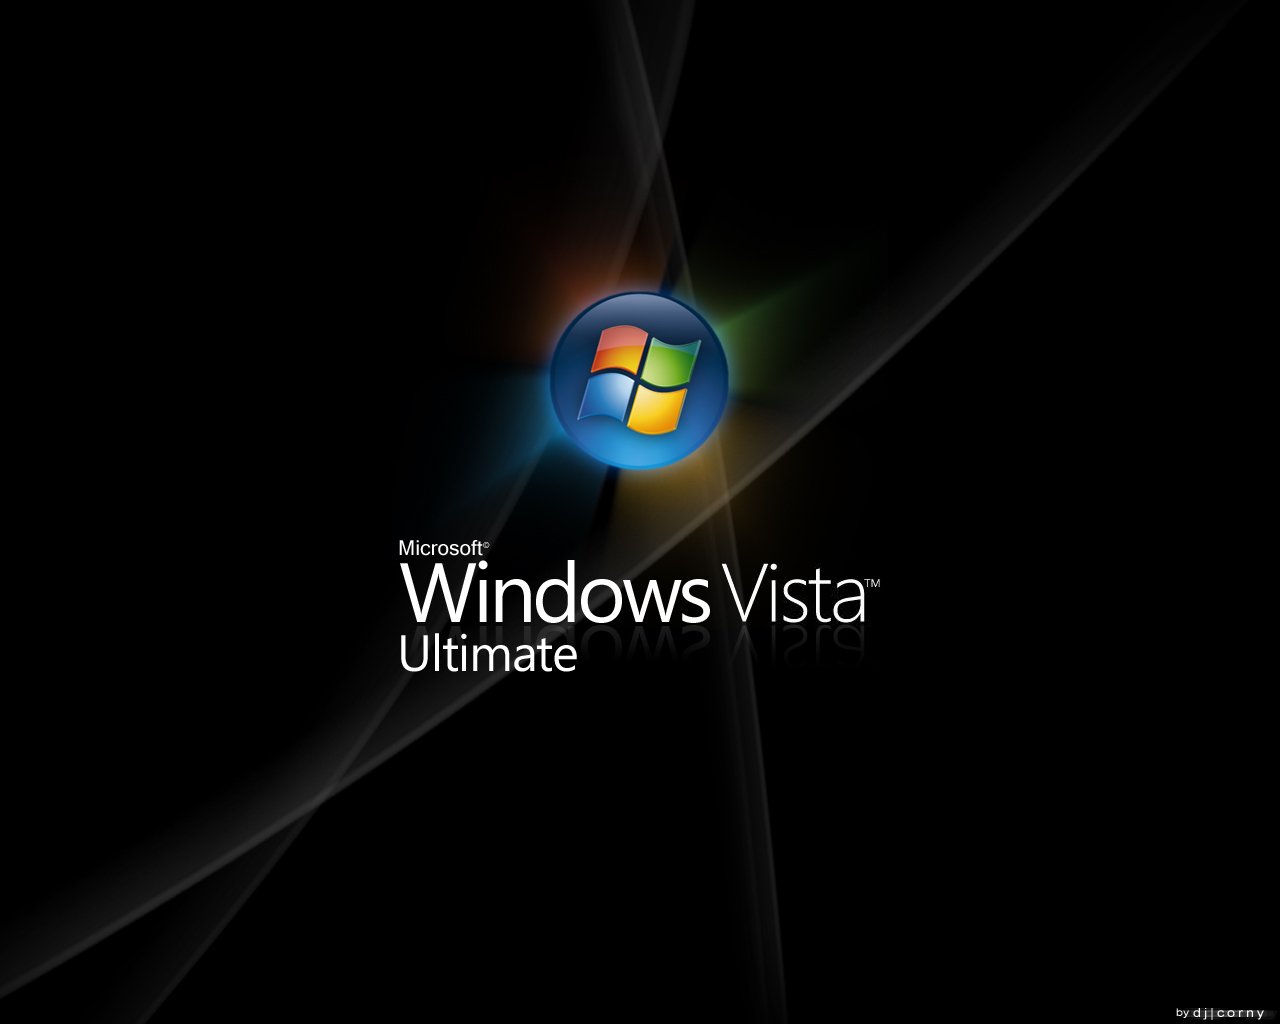 HD Wallpaper Linux Vs Windows Vista Ultimate Fondos De Pantalla By